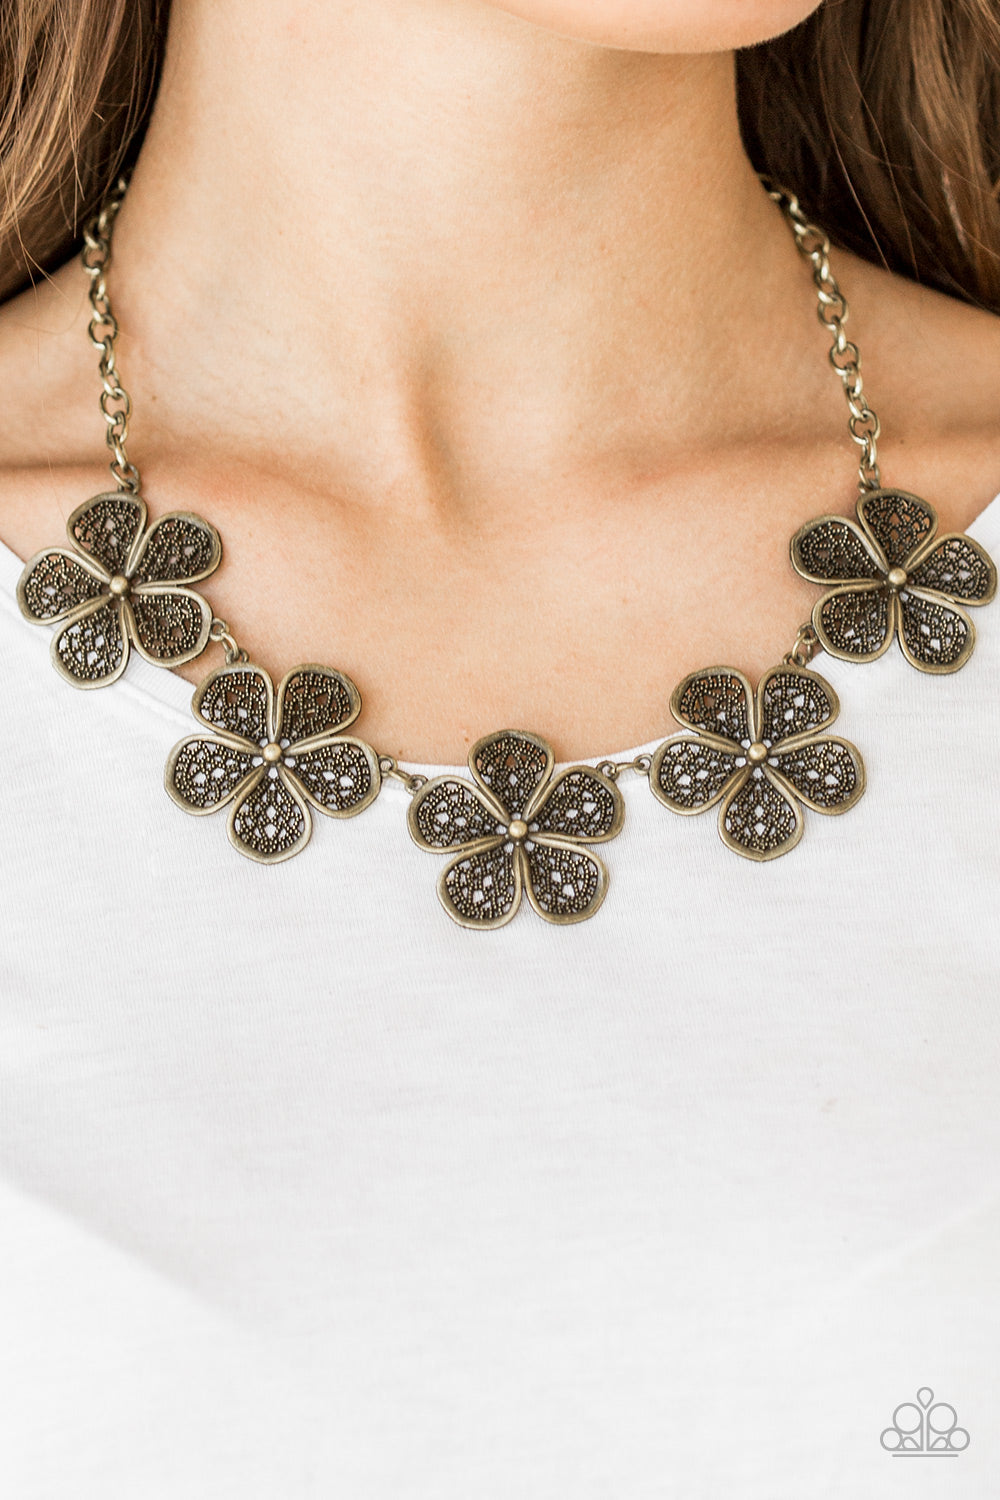 No Common Daisy - Brass Petal Necklace - Paparazzi Accessories - Paparazzi Accessories 